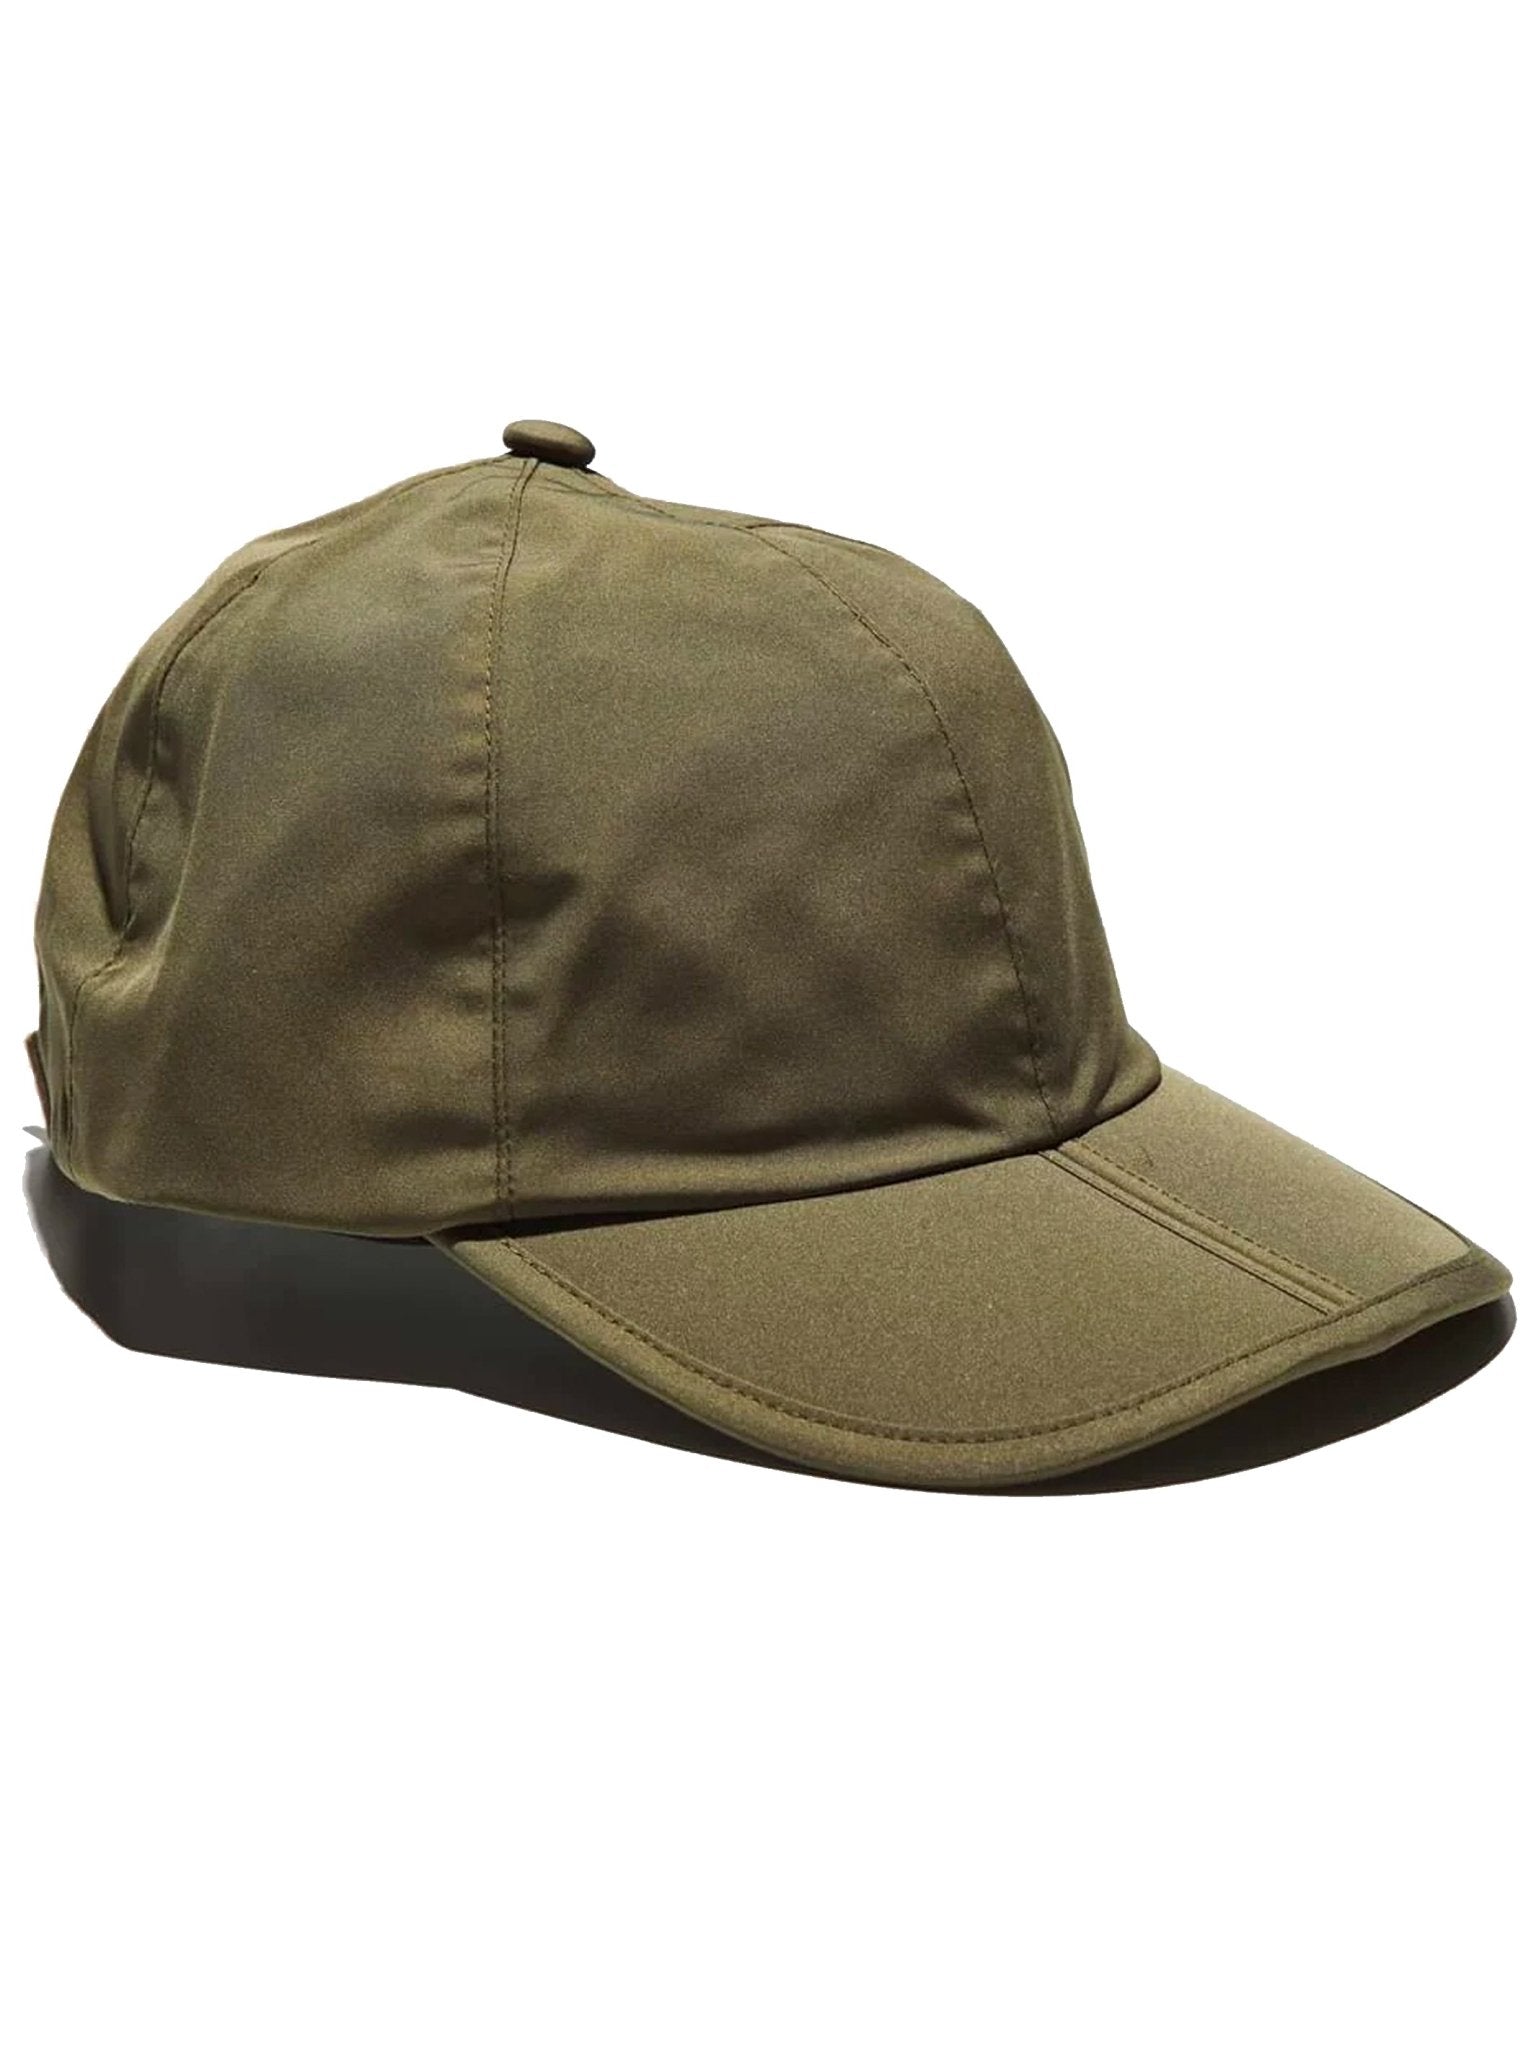 4elementsclothingSealSkinzSealskinz - Waterproof Windproof Fold Hat / Salle Peaked Cap / Baseball cap / Folding Peak HatHats13100038000300